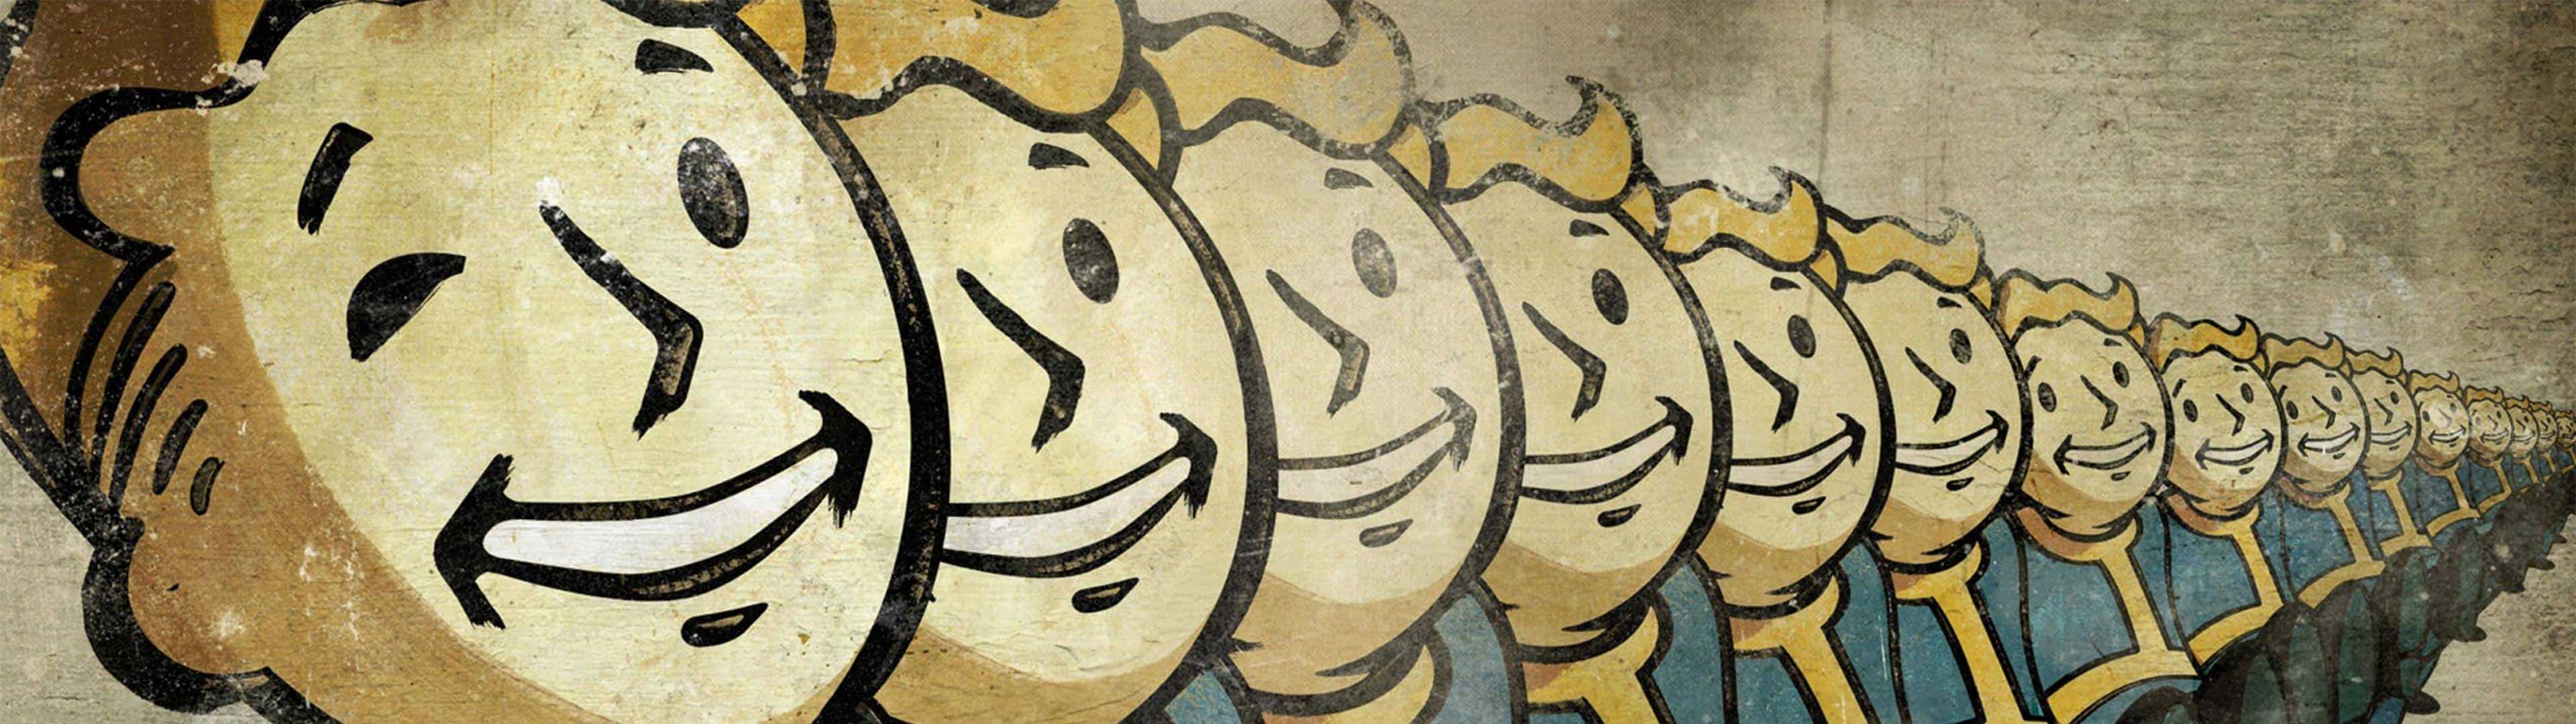 Fallout 4 Vault Boys Dual Monitor Wallpaper Pixelz